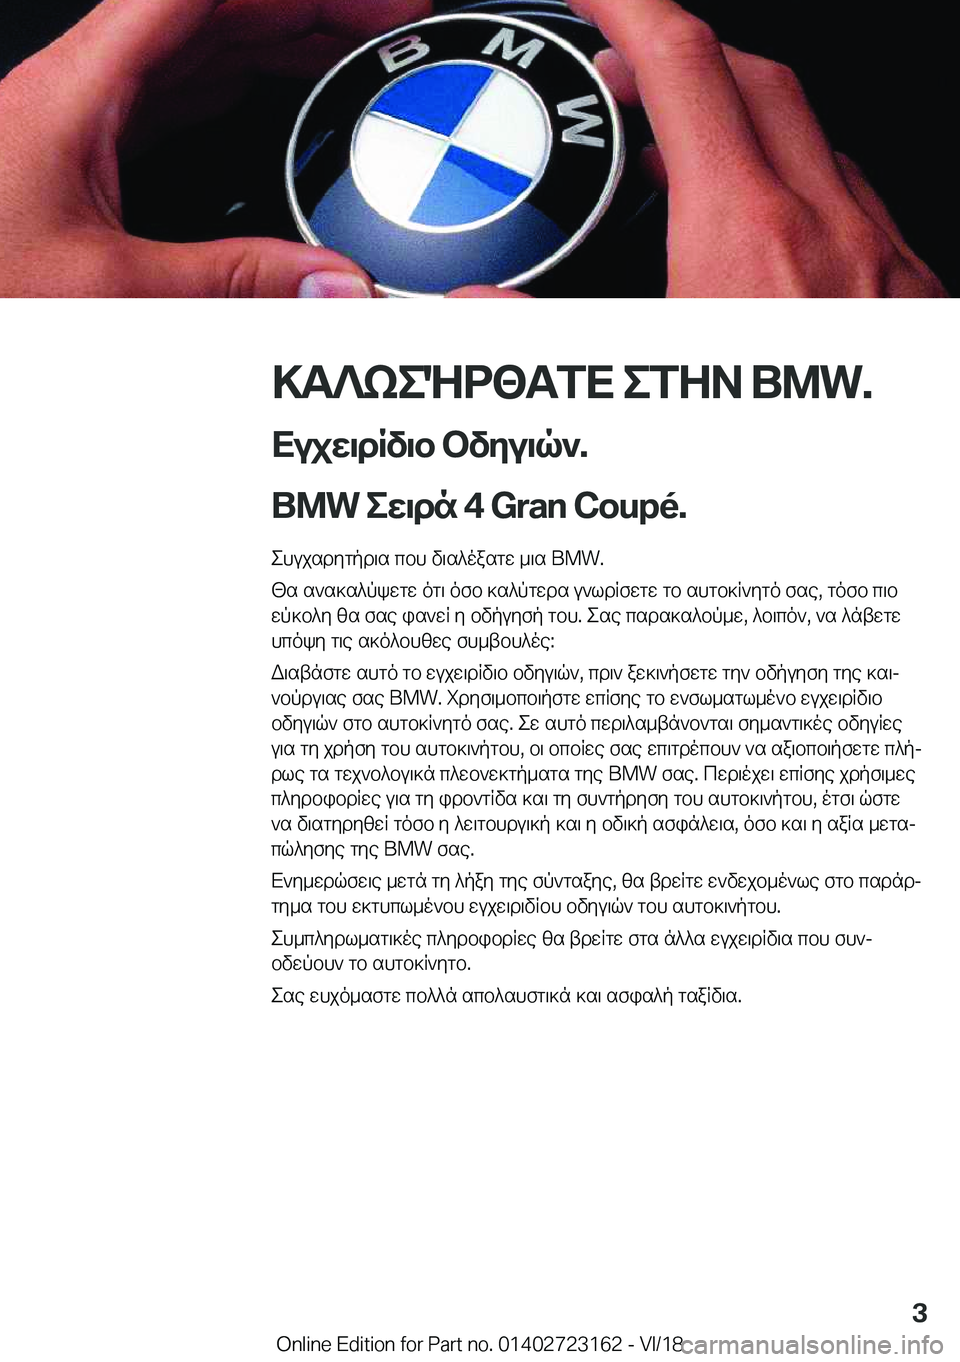 BMW 4 SERIES GRAN COUPE 2019  ΟΔΗΓΌΣ ΧΡΉΣΗΣ (in Greek) >T?keNd<TfX�efZA��B�M�W�.
Xujw\dRv\b�bvyu\q`�.
�B�M�W�ew\dn��4��G�r�a�n��C�o�u�p�